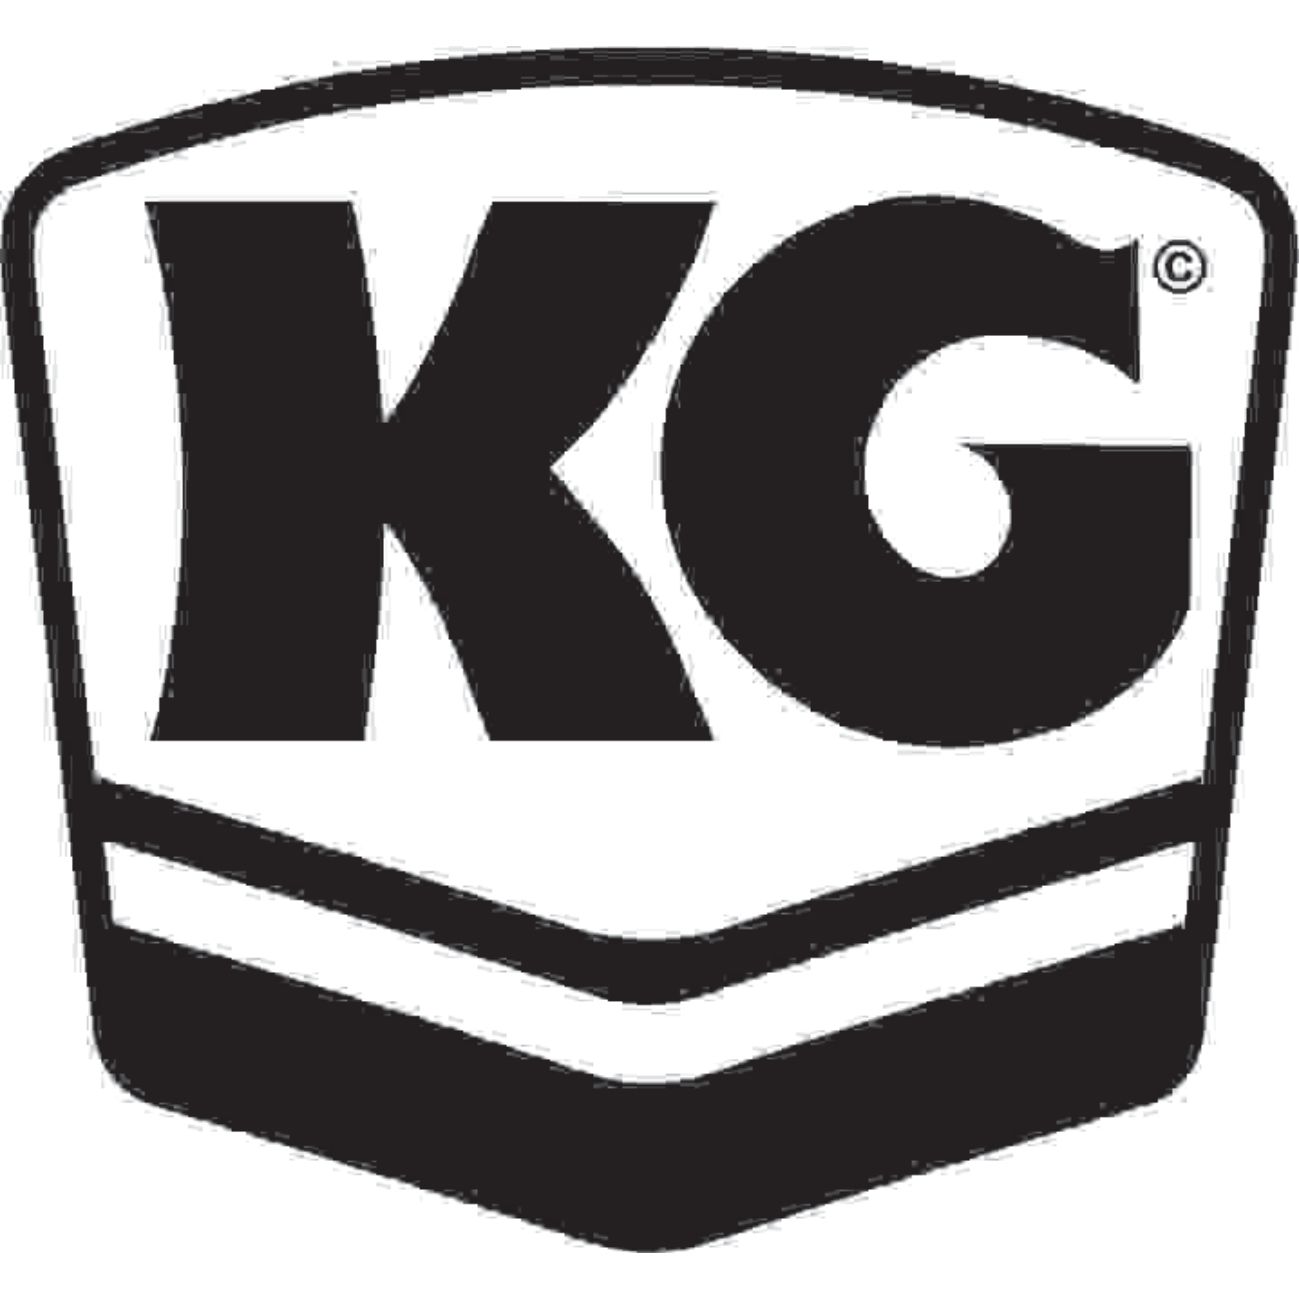 Brand: KG